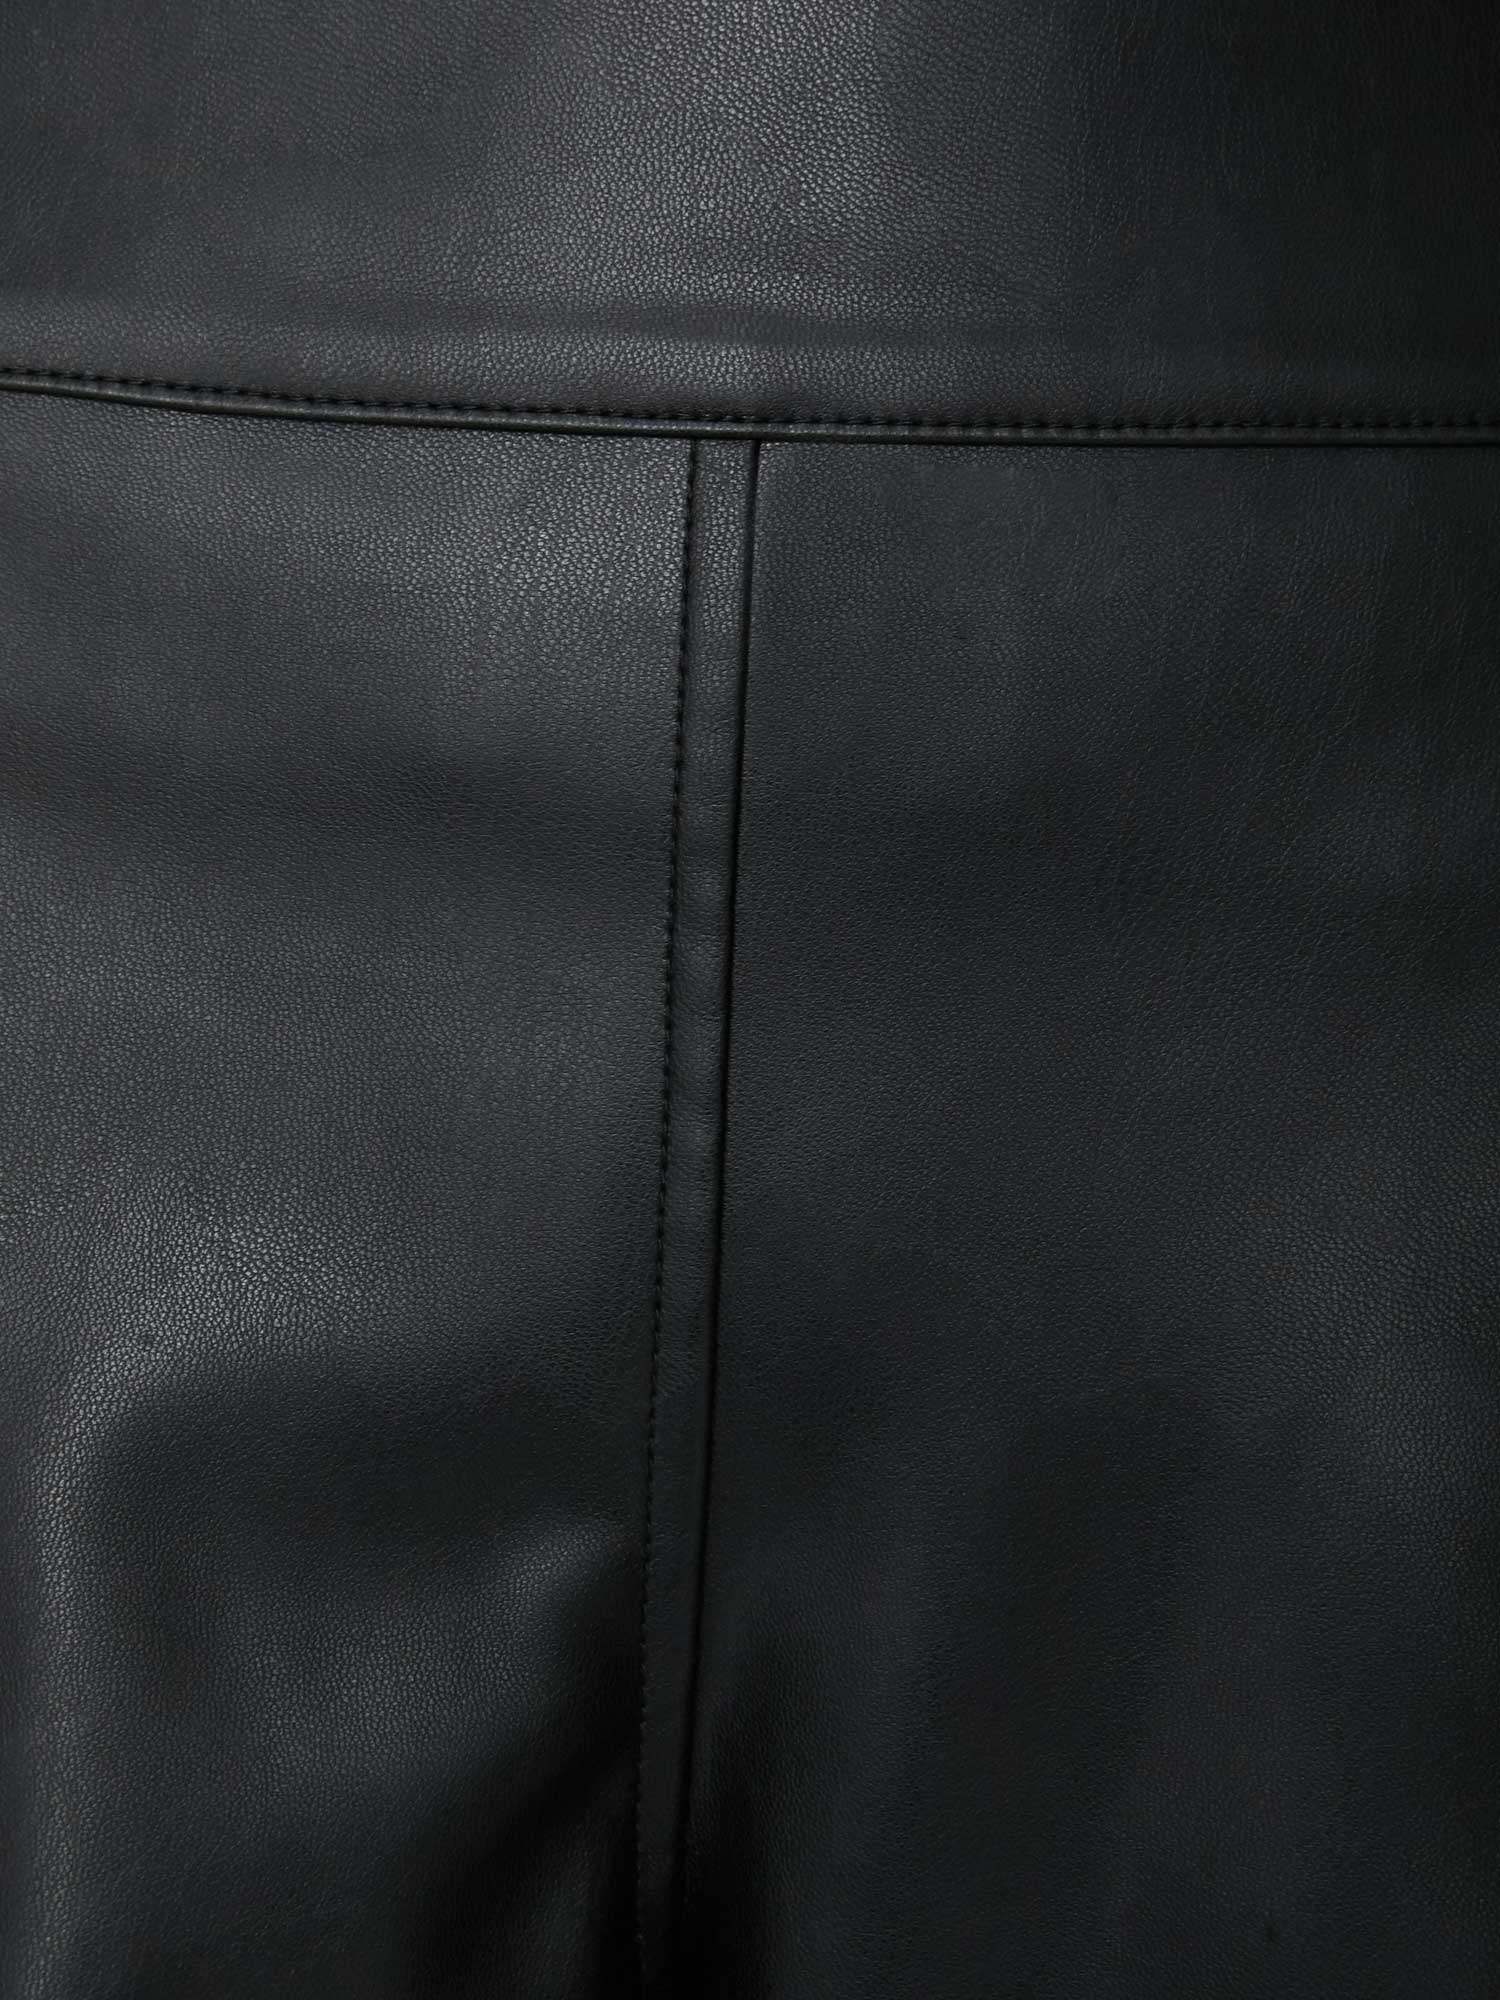 Frida cropped black vegan leather pant close up 2